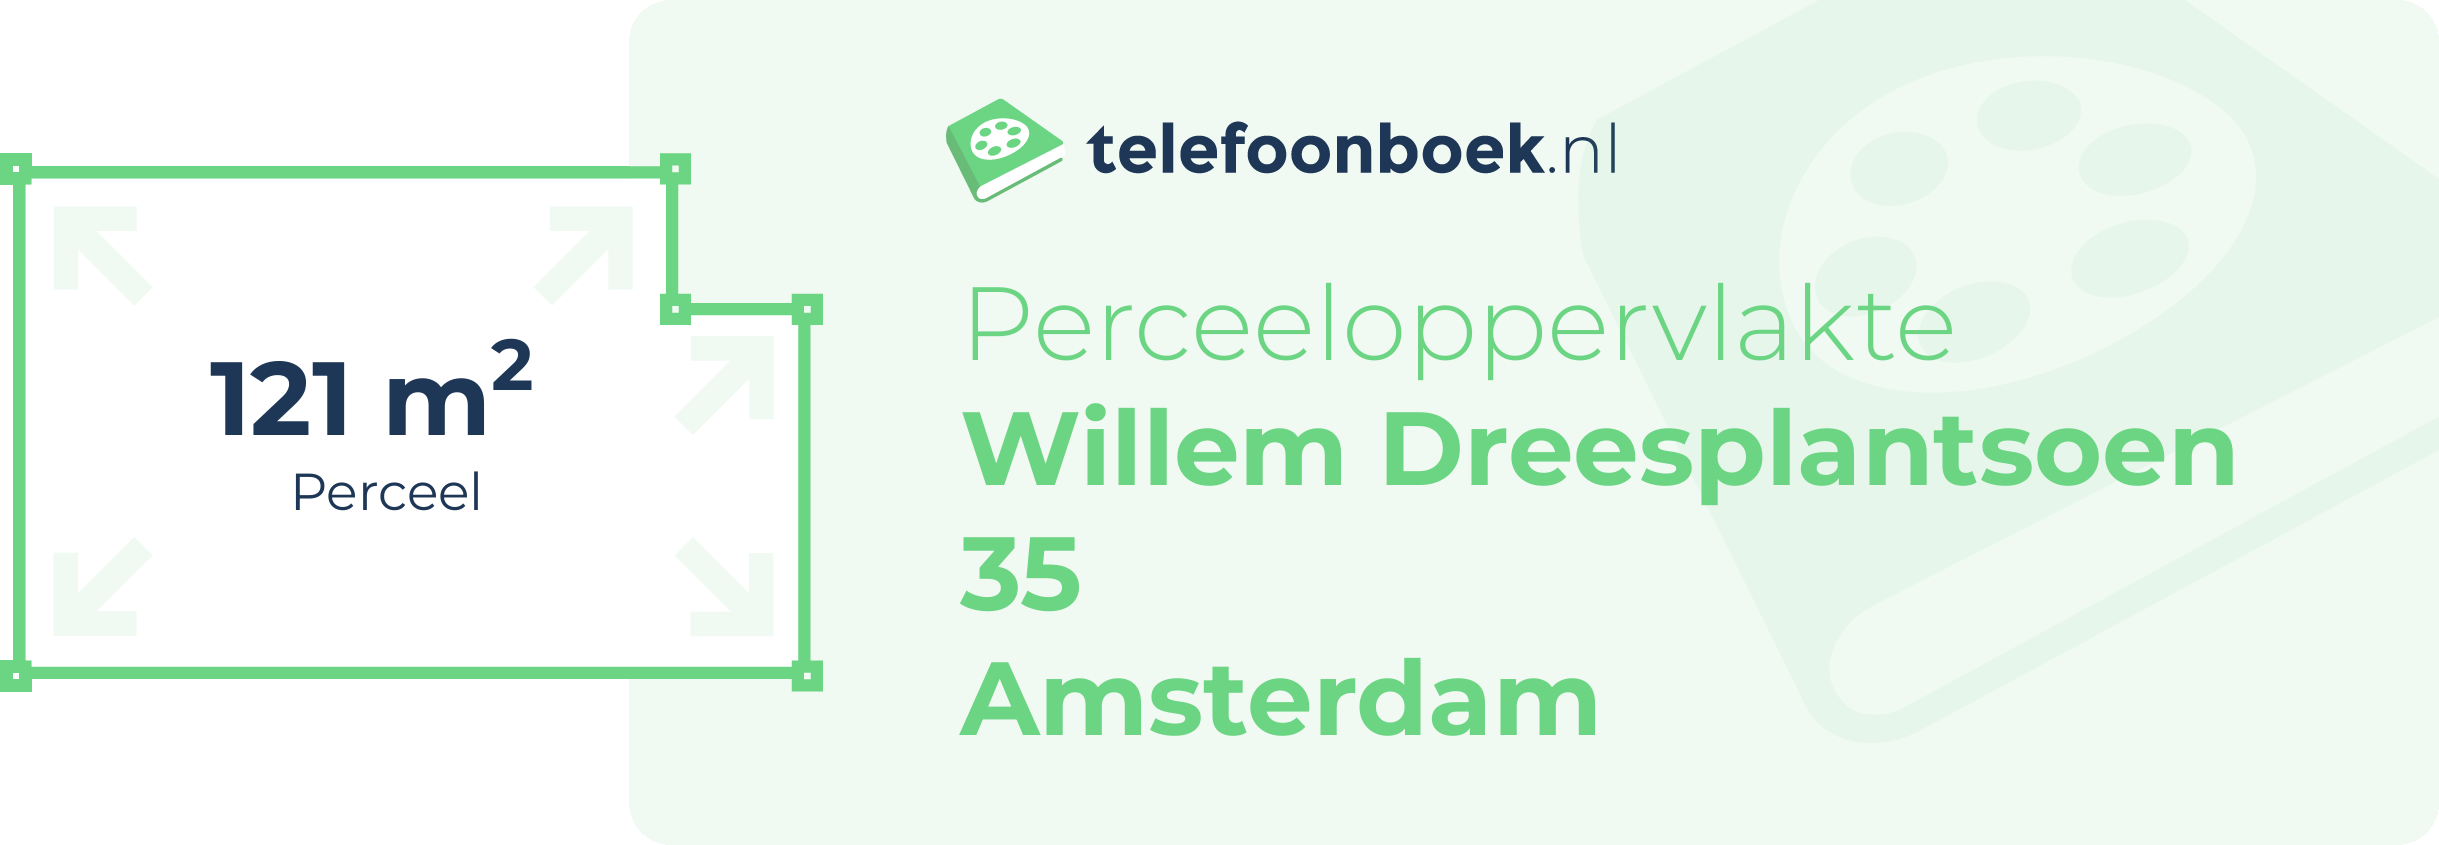 Perceeloppervlakte Willem Dreesplantsoen 35 Amsterdam